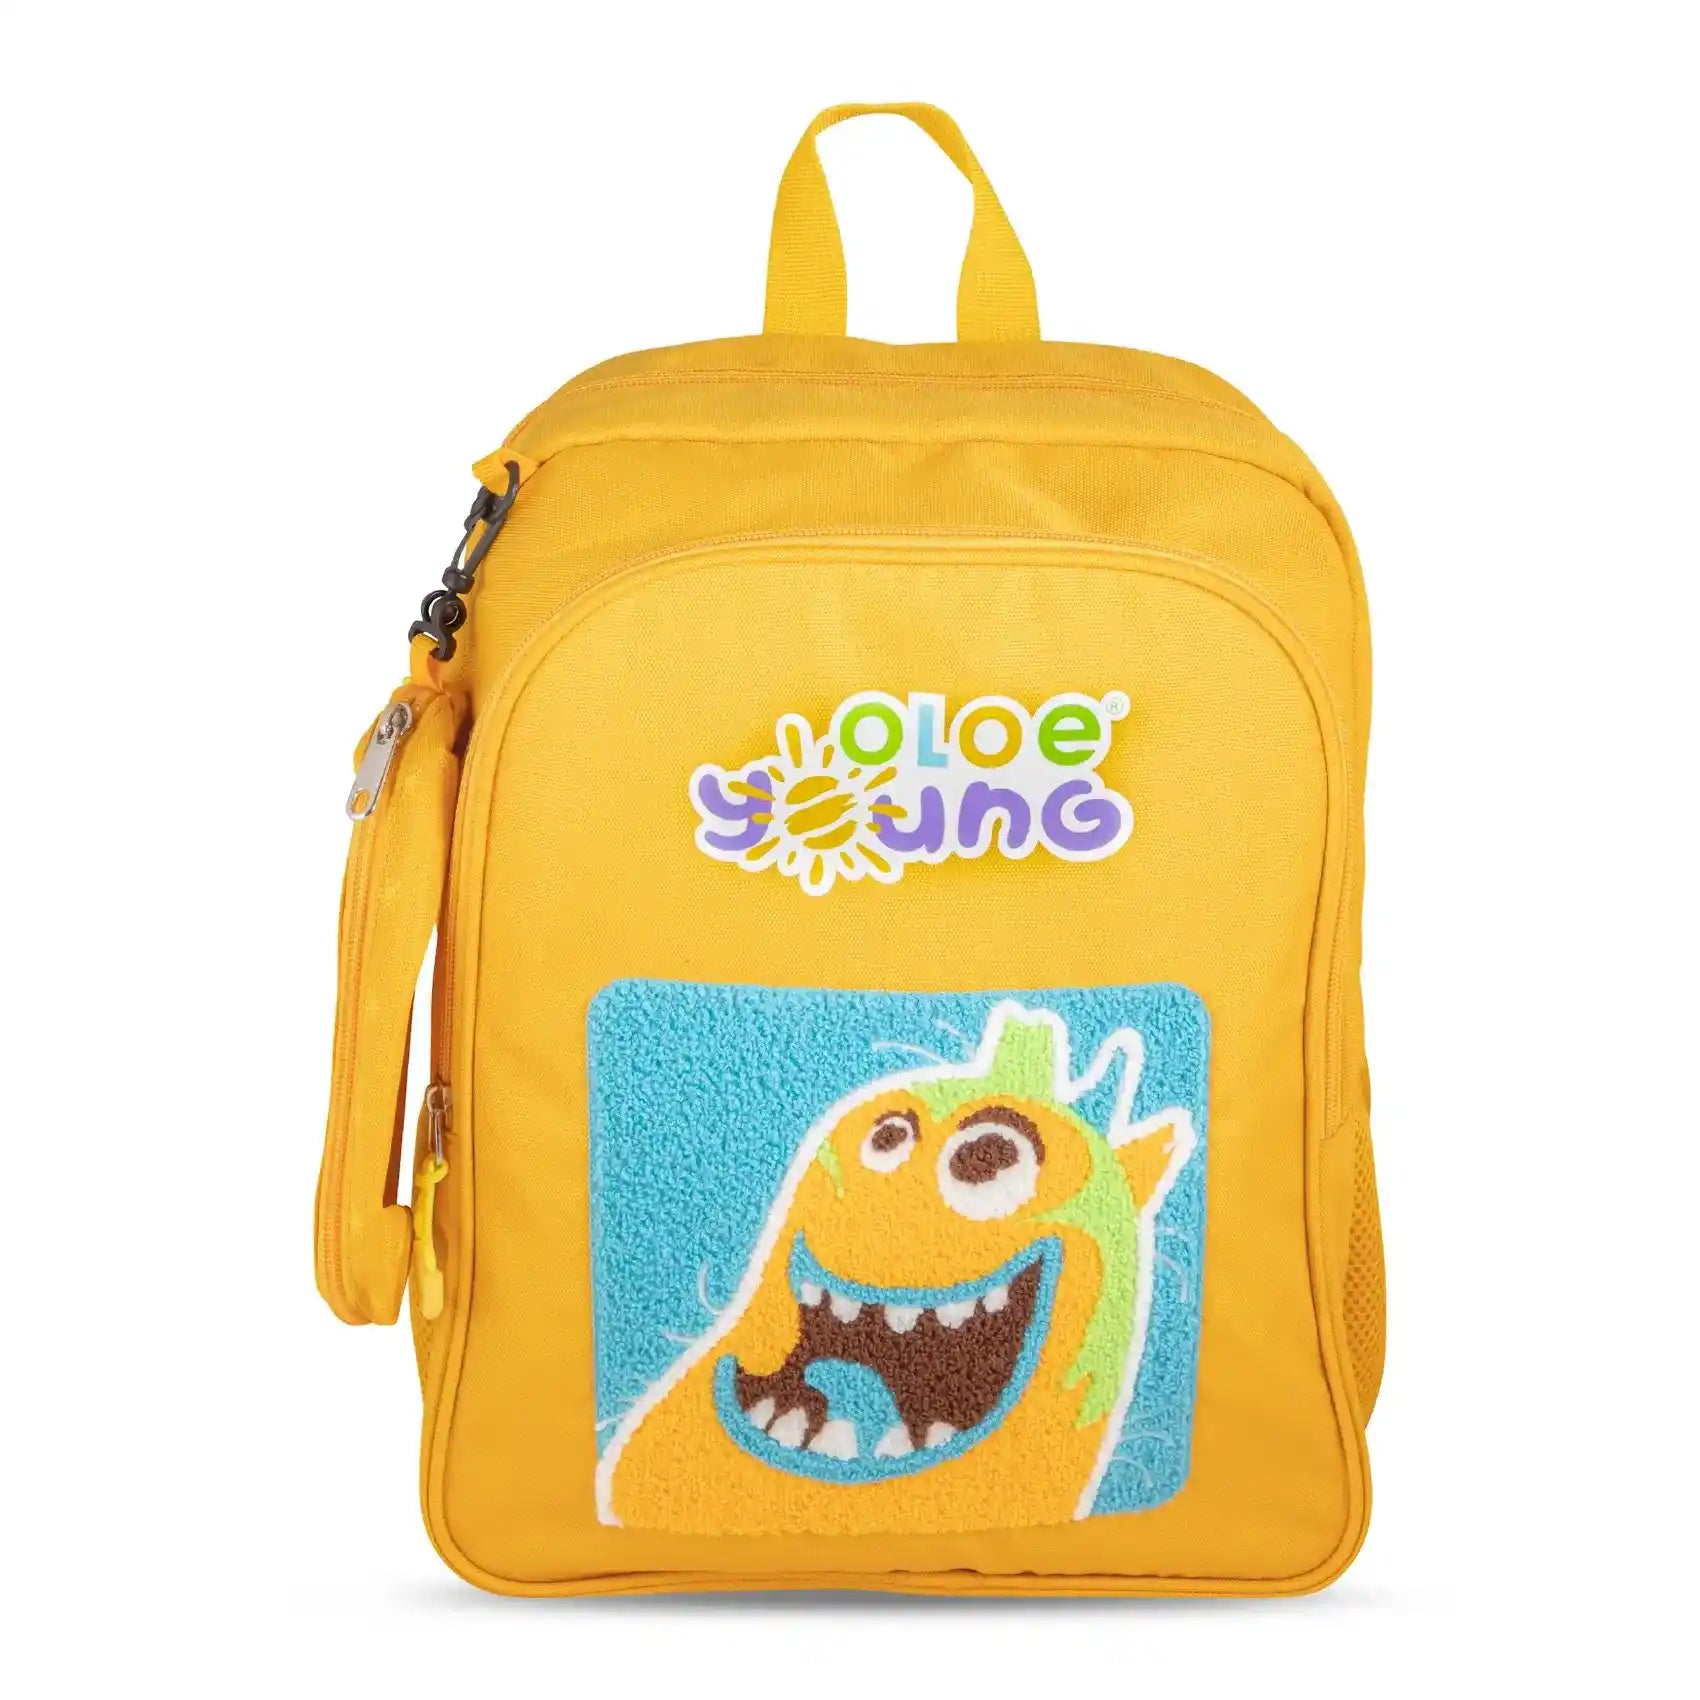 oloe-plush-character-backpack-ojo-orange-front-facing